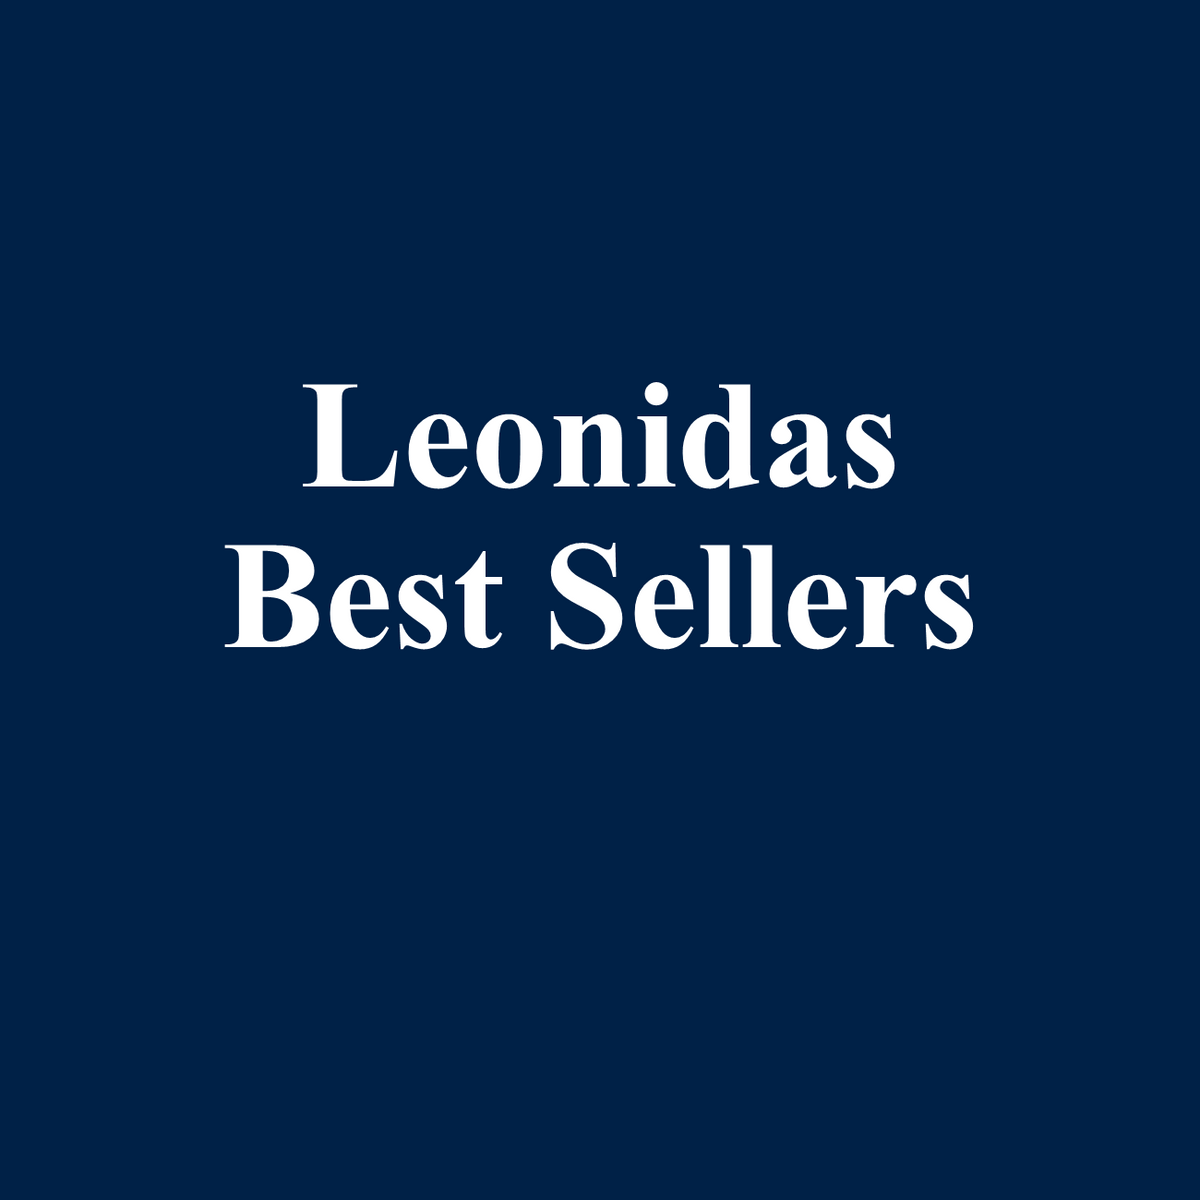 Leonidas Chocolates Best Sellers